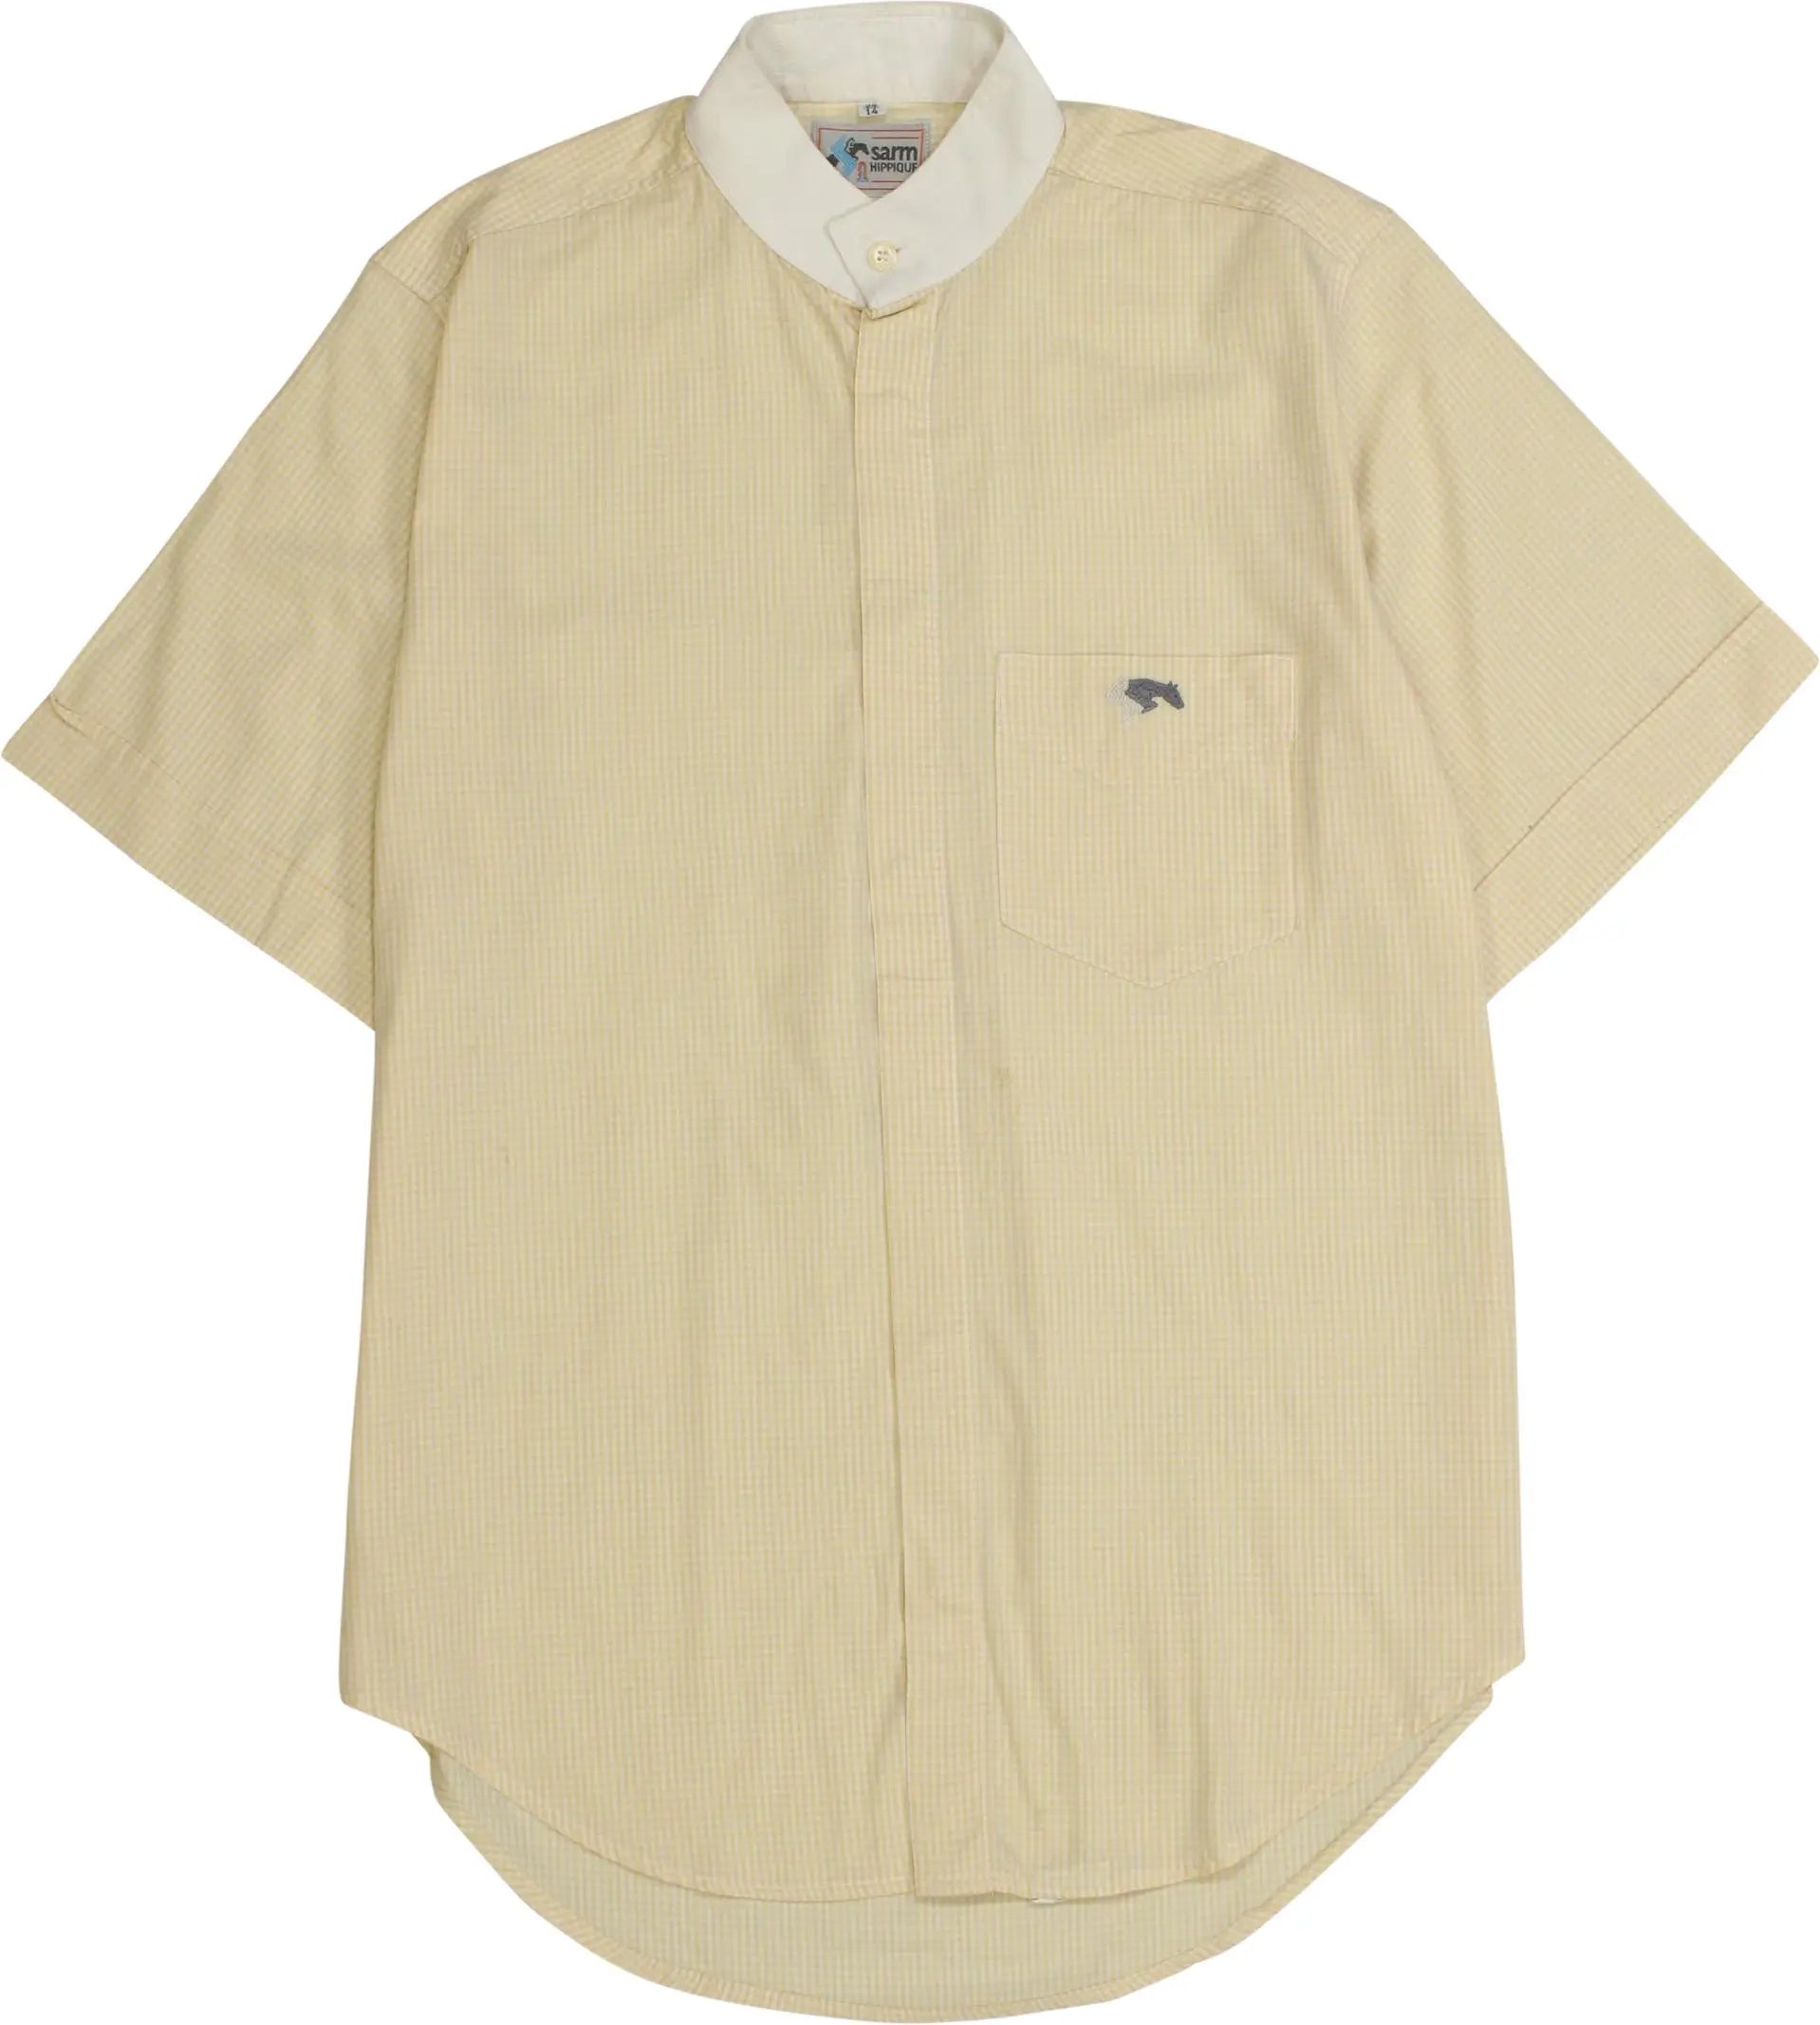 Sam Hippique - Short Sleeve Shirt- ThriftTale.com - Vintage and second handclothing